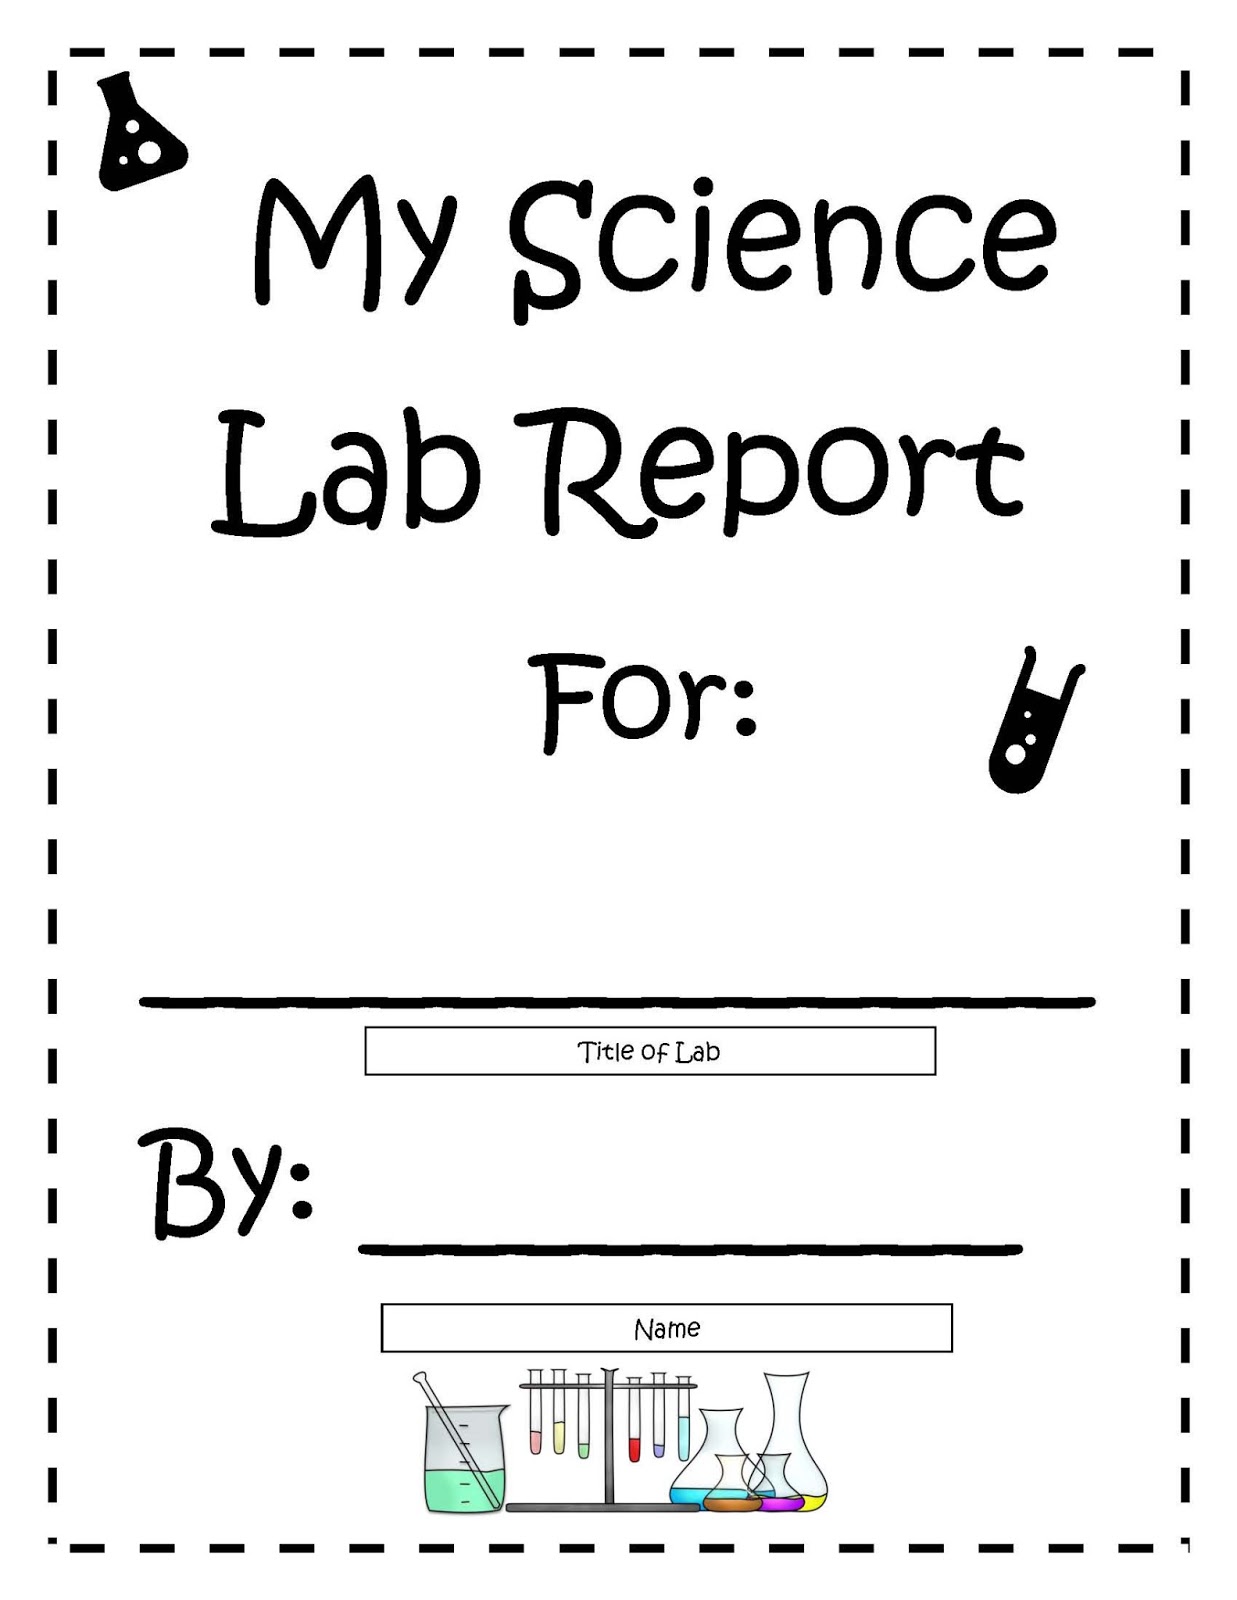 How to write scientific report